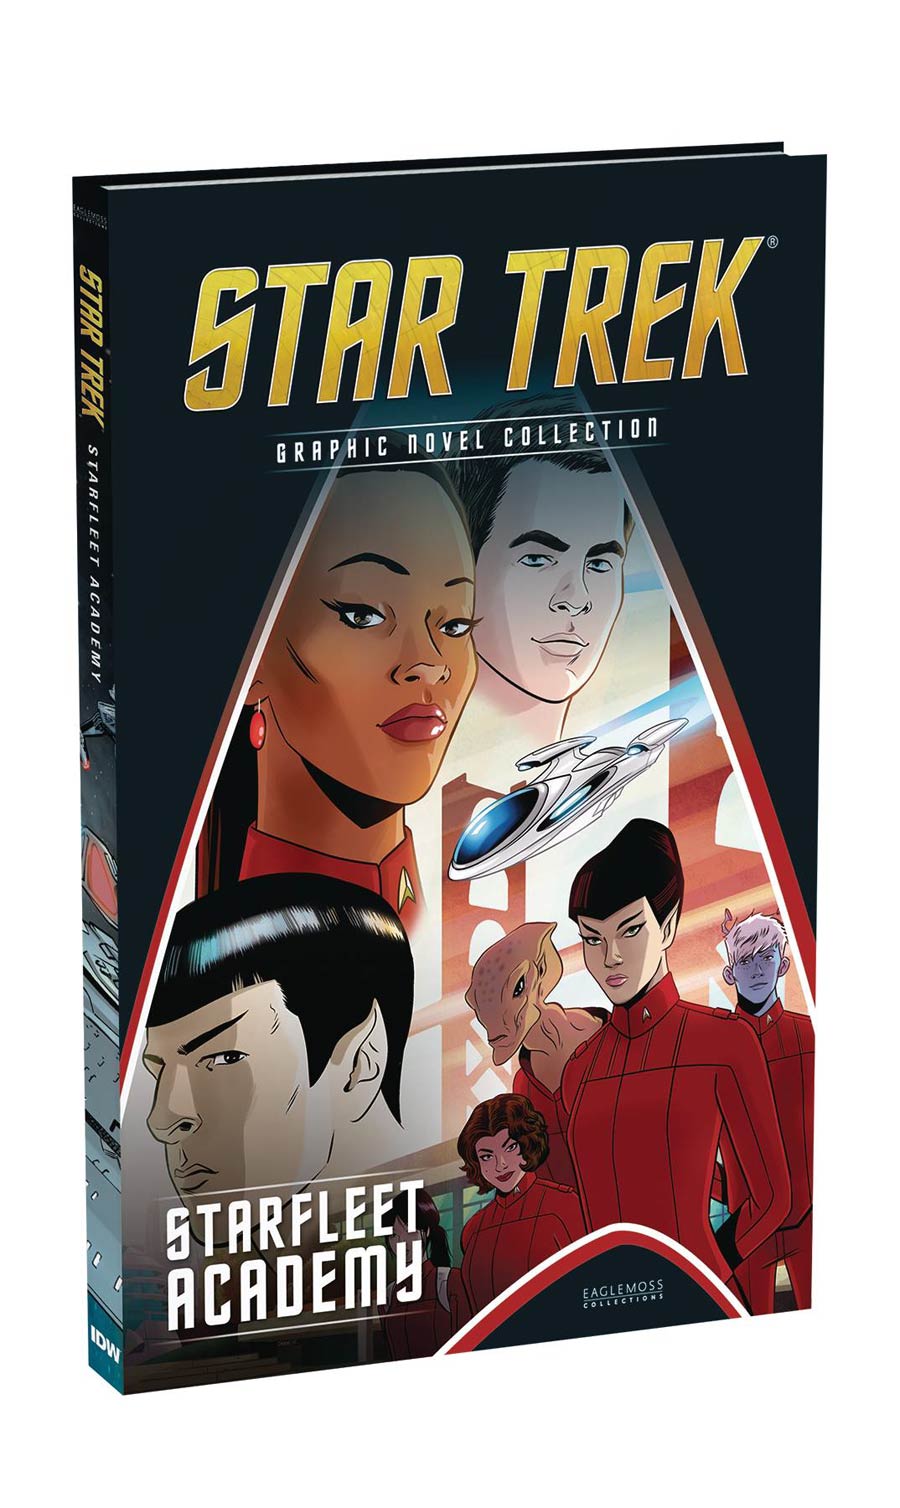 Star Trek Graphic Novel Collection #8 Starfleet Academy HC